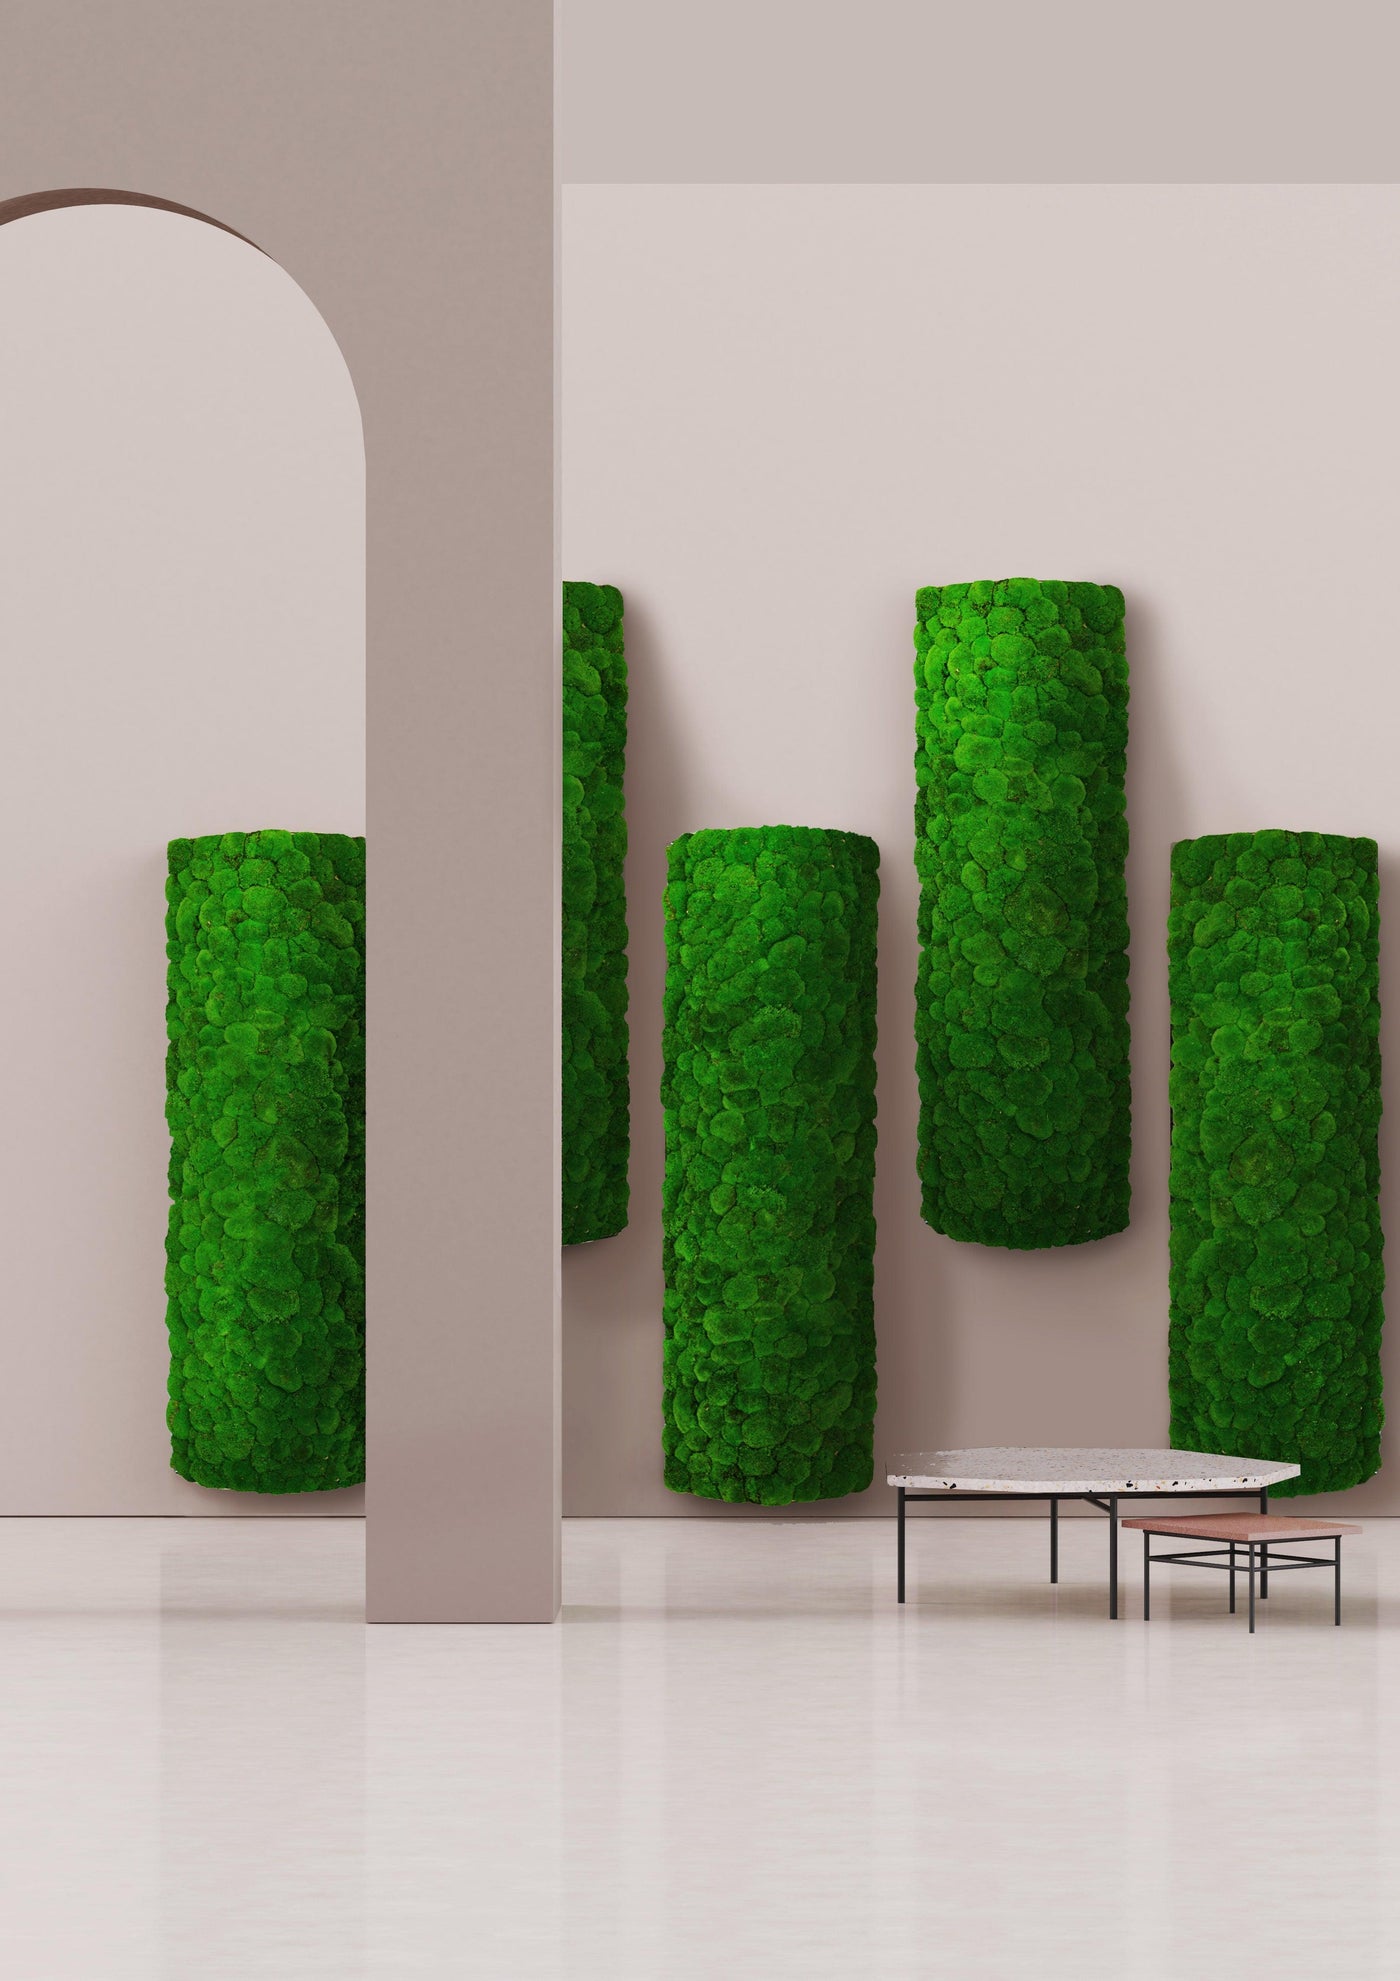 Simulated Moss Panel Backdrop Plant Decor Background Moss Wall Panel Fake  Moss Board 